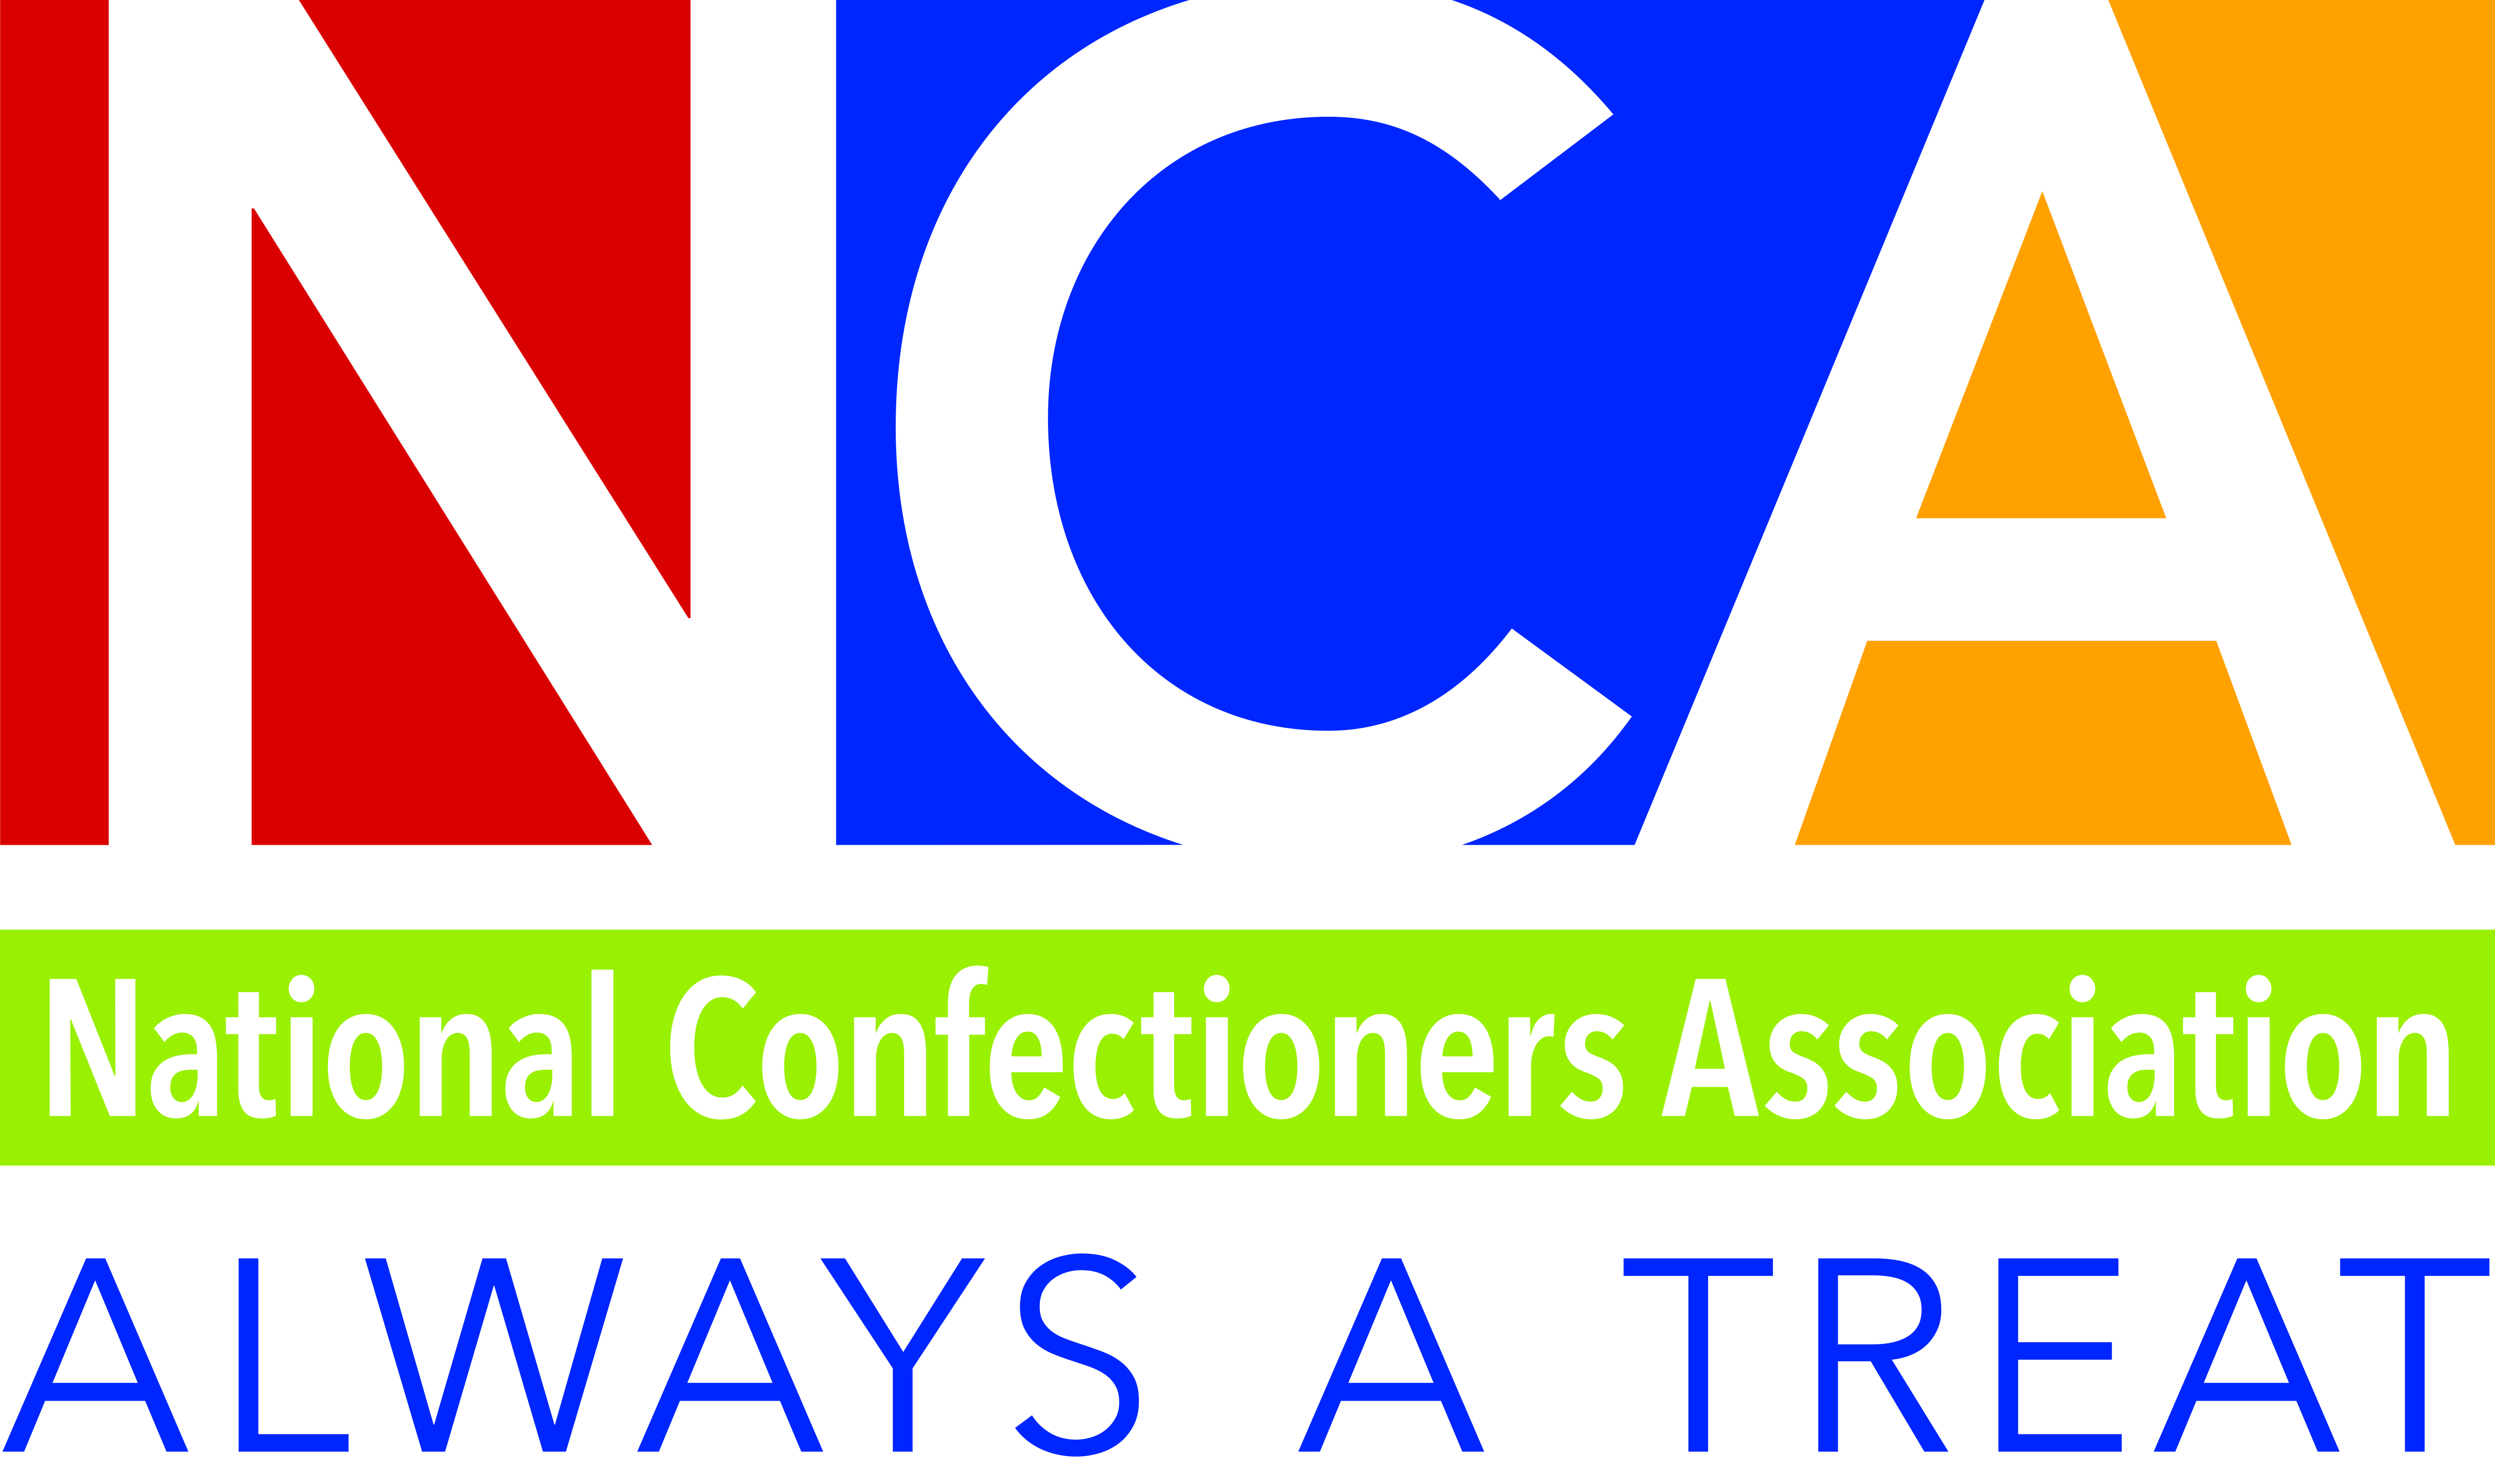 National Confectioners Association logo